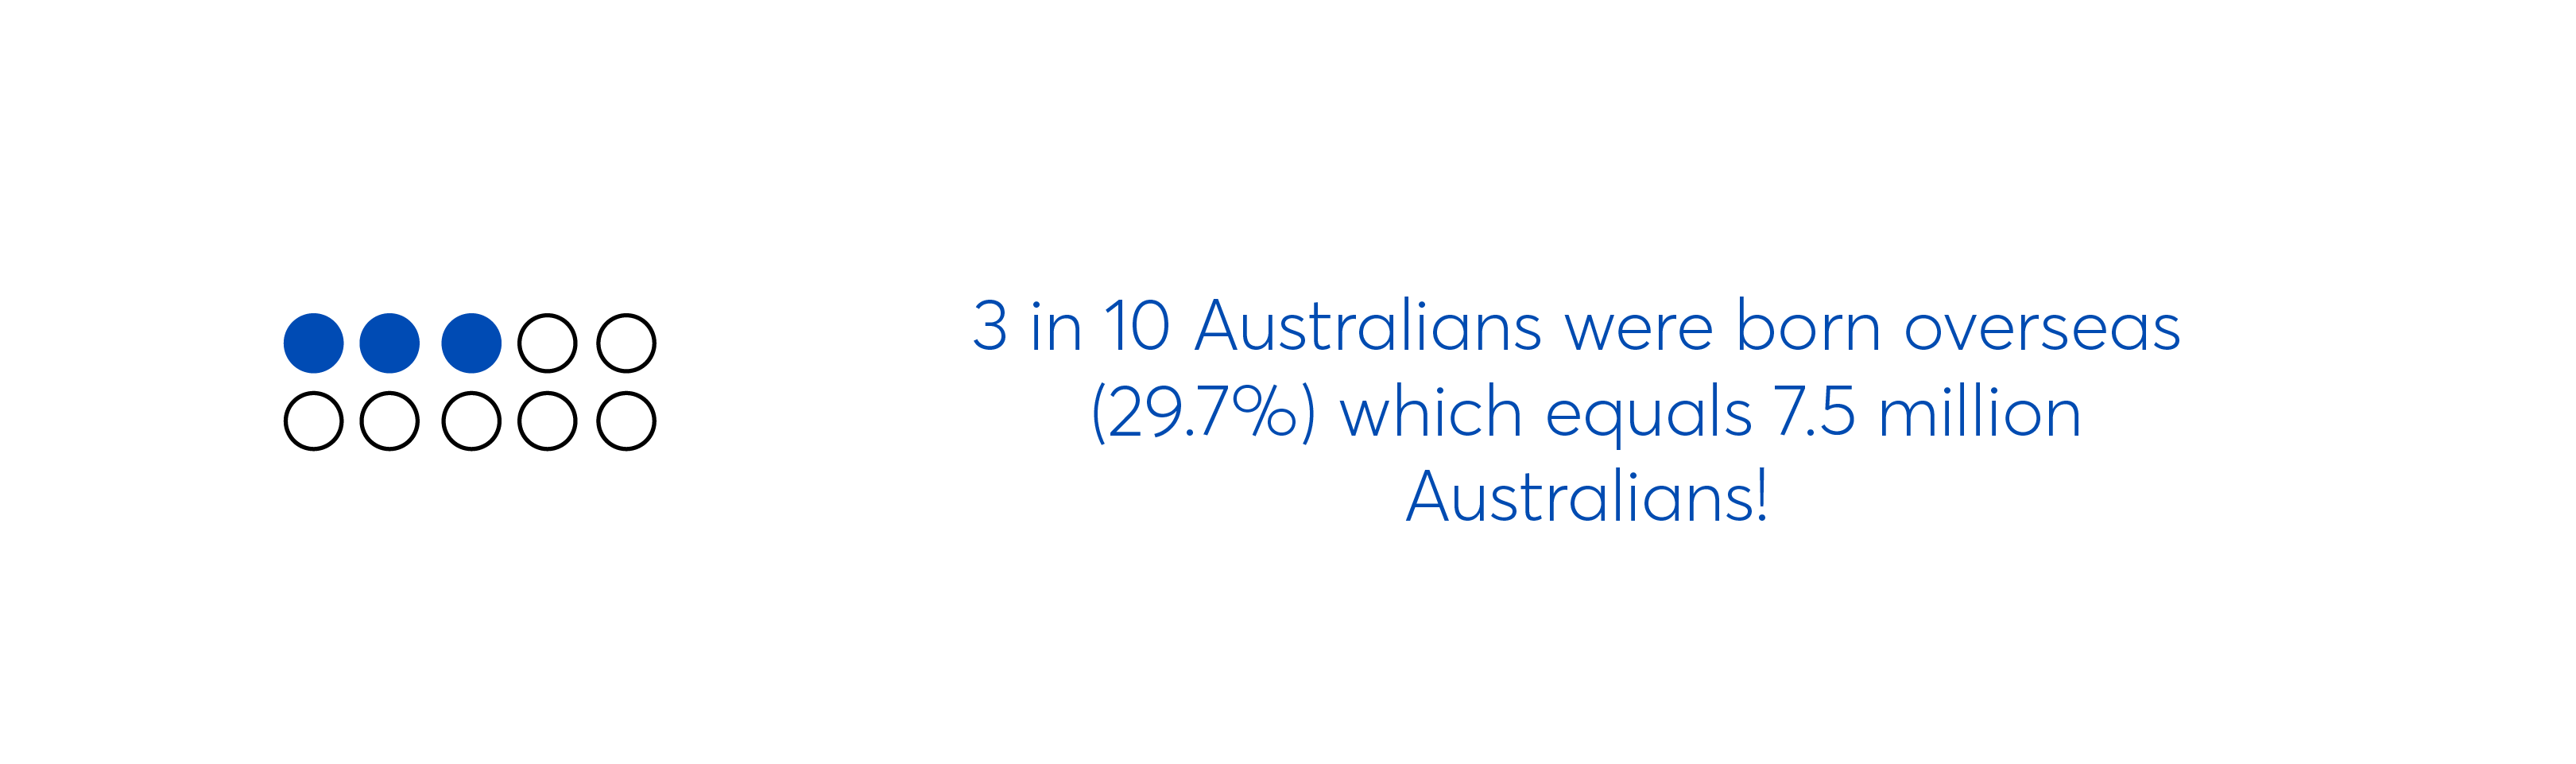 3 in 10 Australians were born overseas